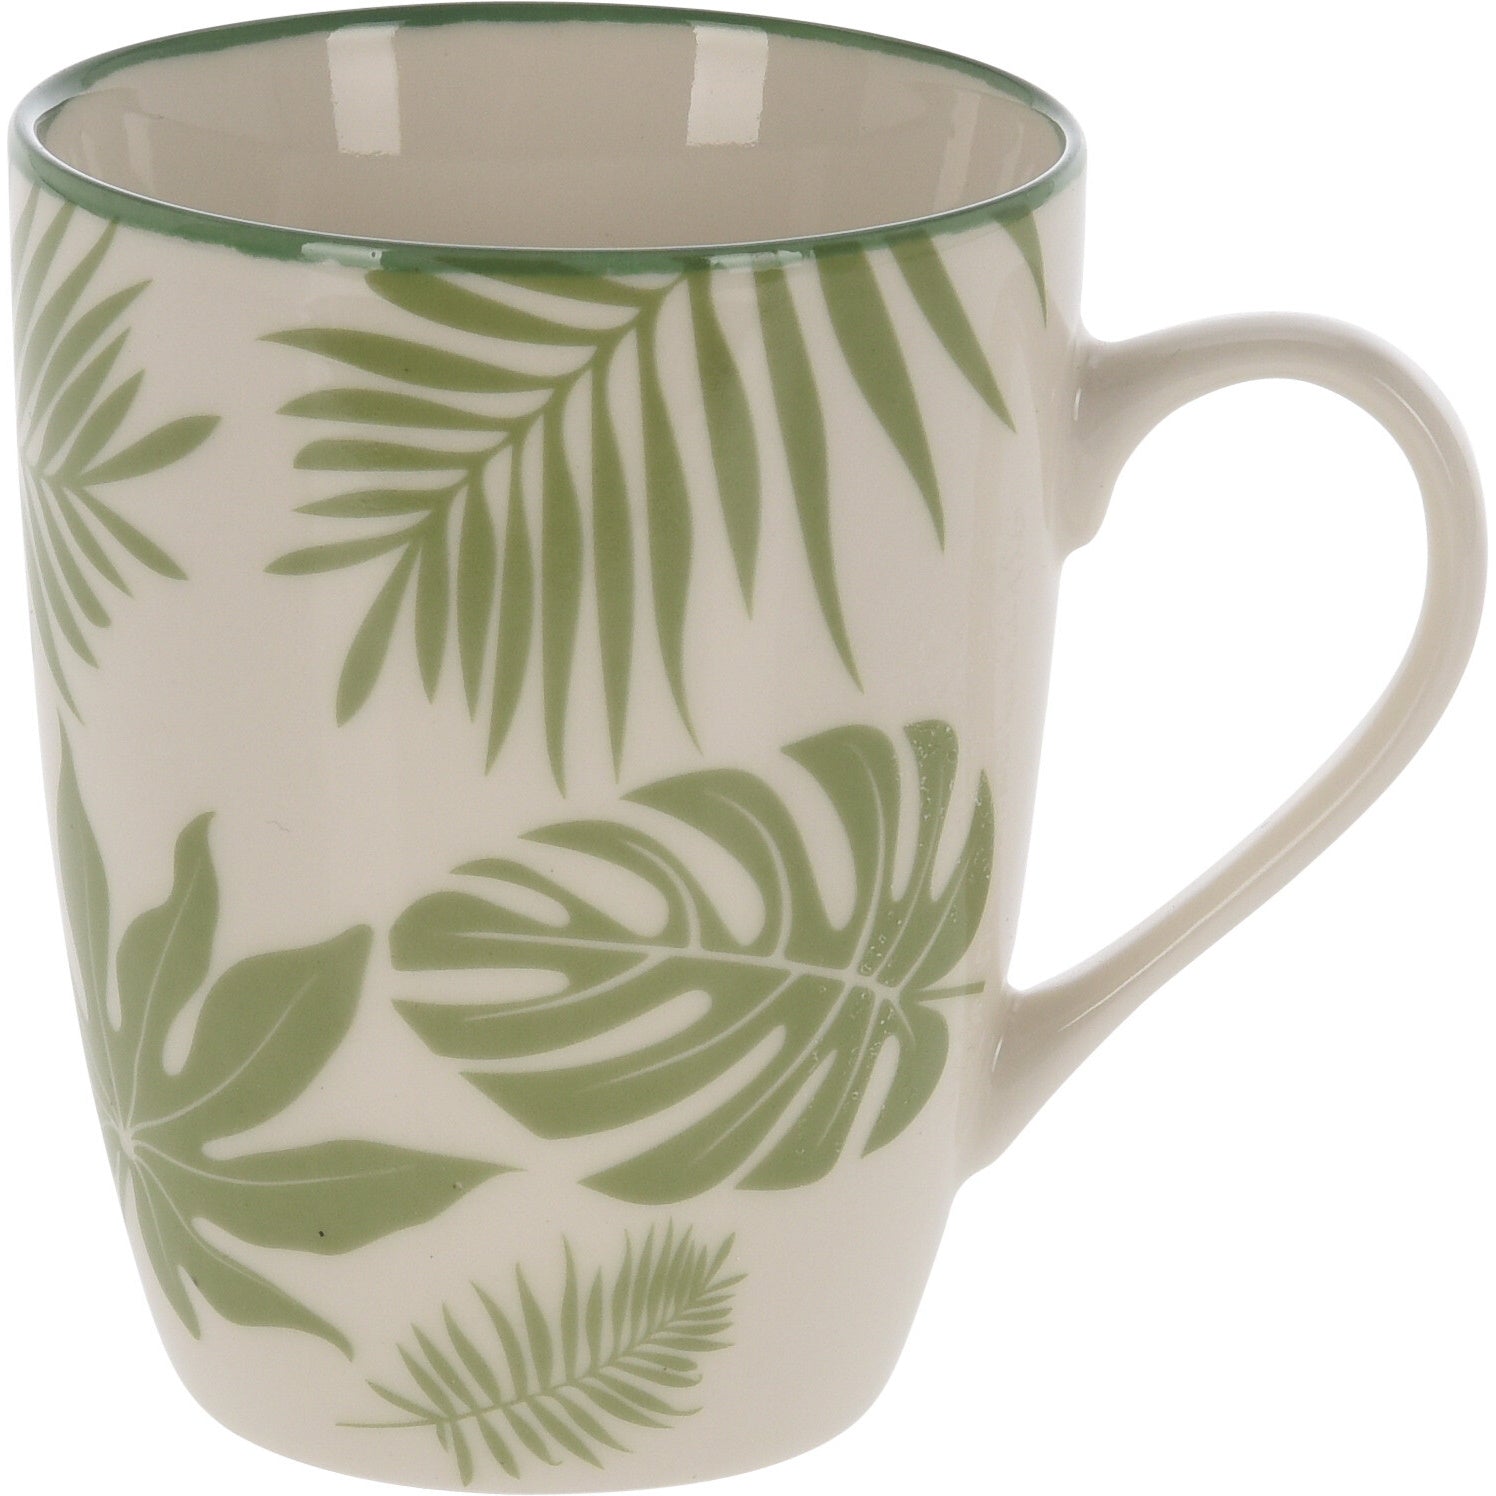 Siaki DN1801300 Porcelain Mug 320ml - Green Leaf Design - Premium Mugs from Koopman International - Just $3.50! Shop now at W Hurst & Son (IW) Ltd